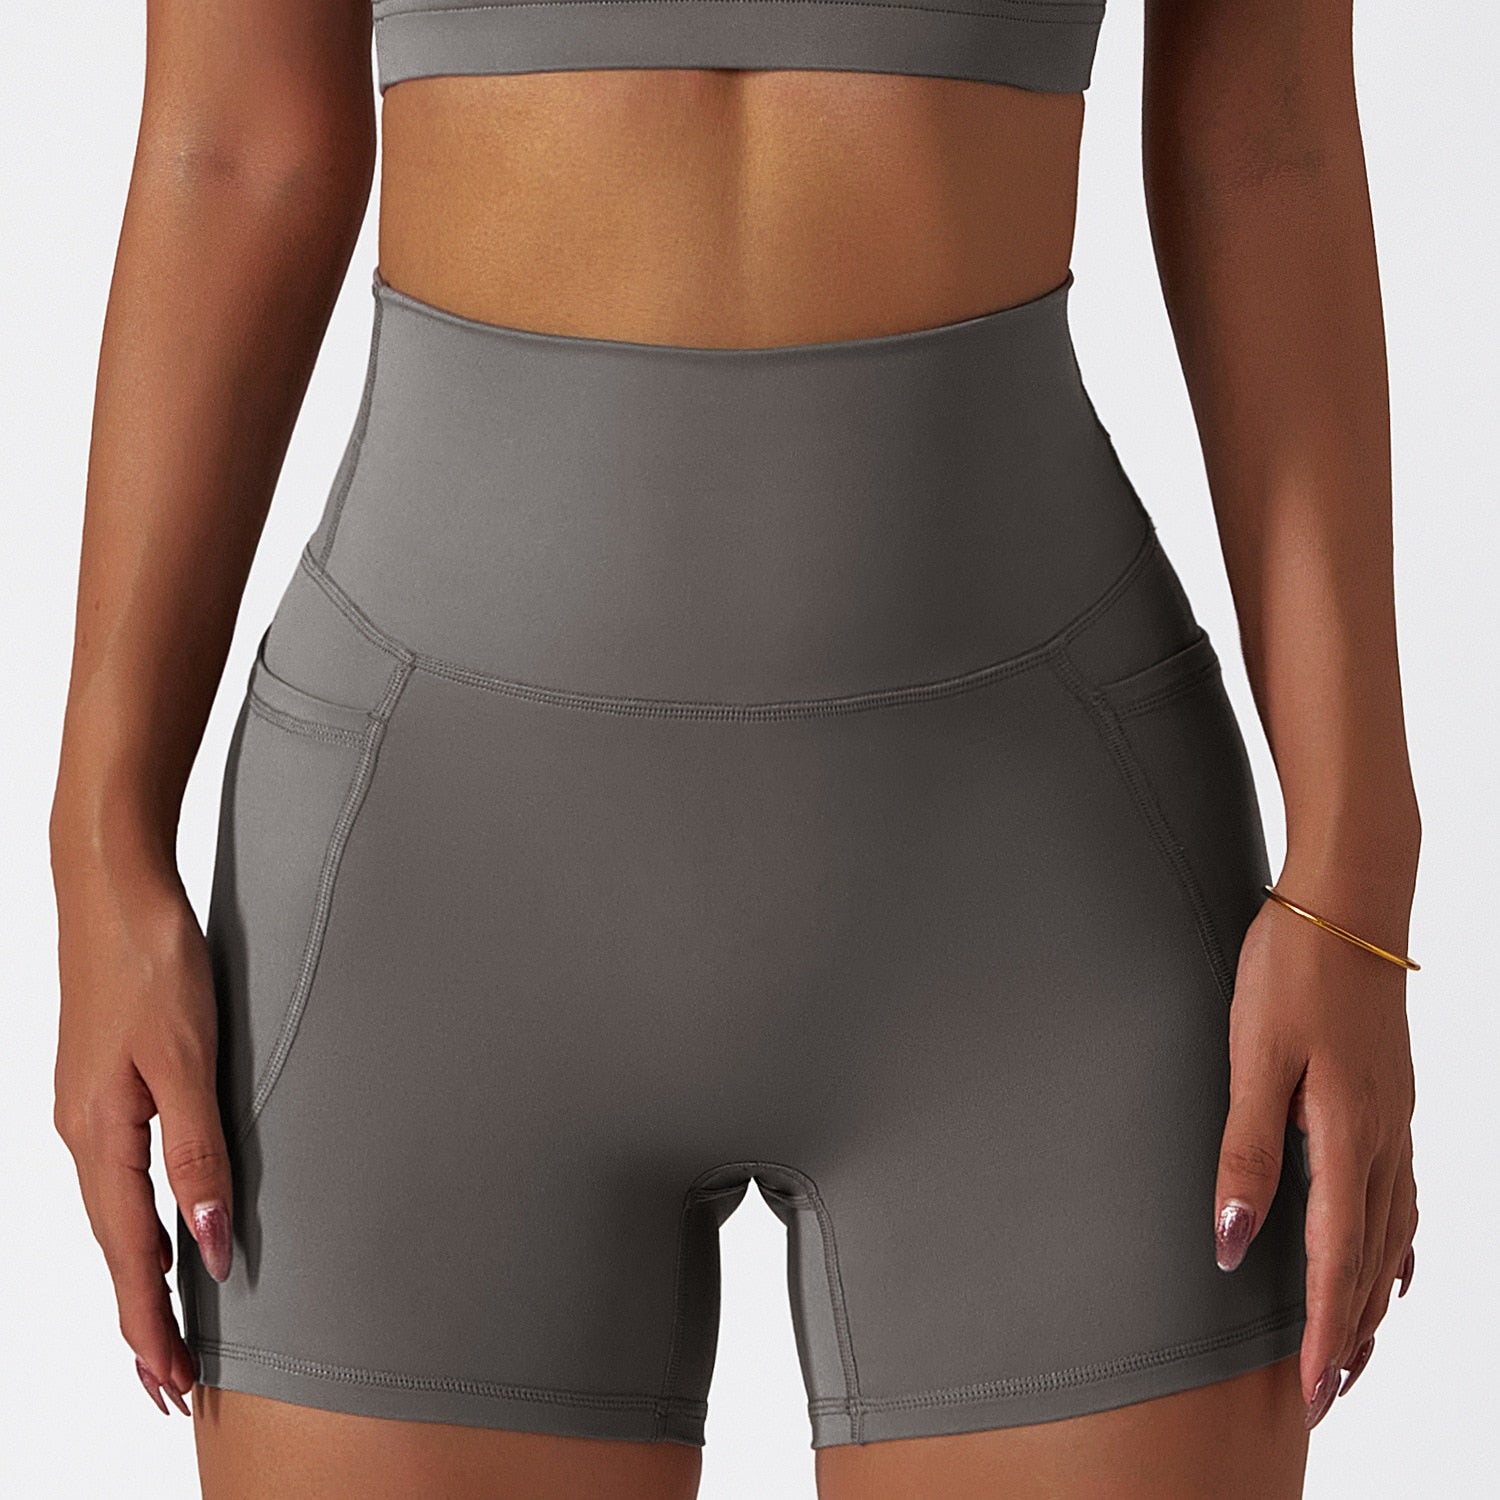 Buy gray Comfortable Skin Friendly High Waist Yoga Shorts